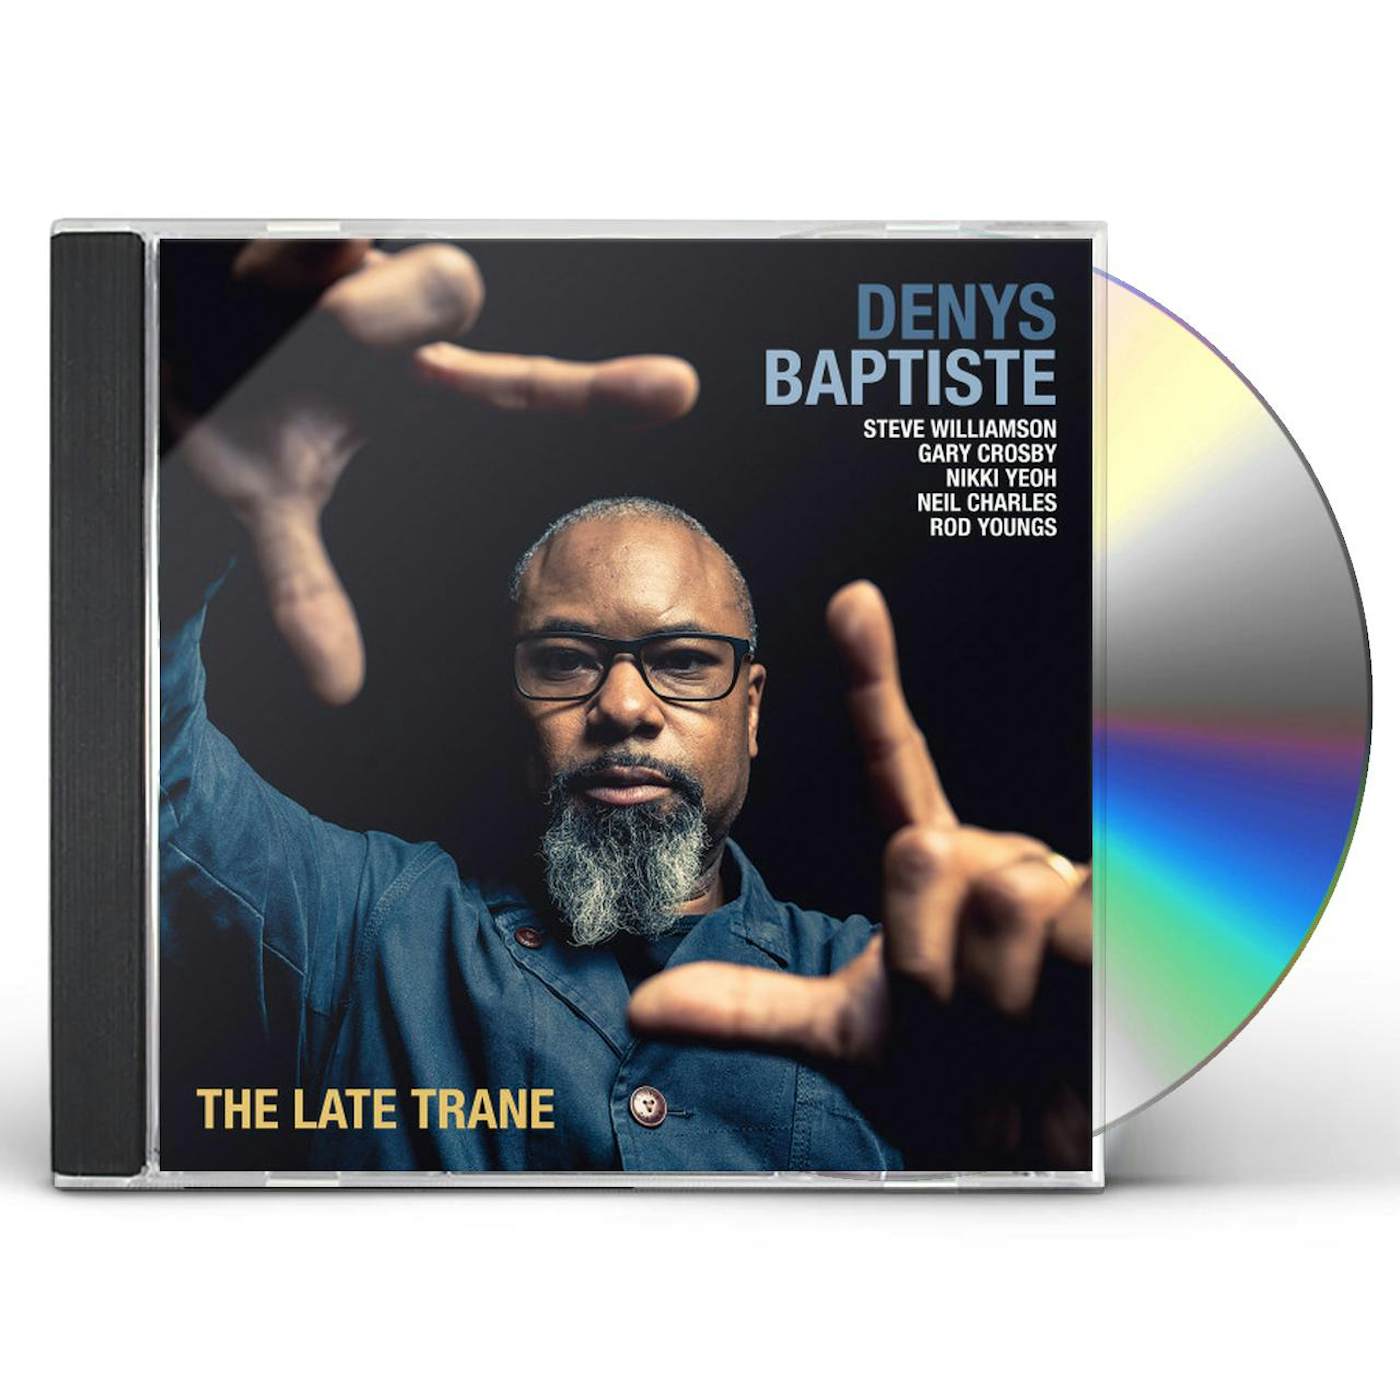 Denys Baptiste LATE TRANE CD